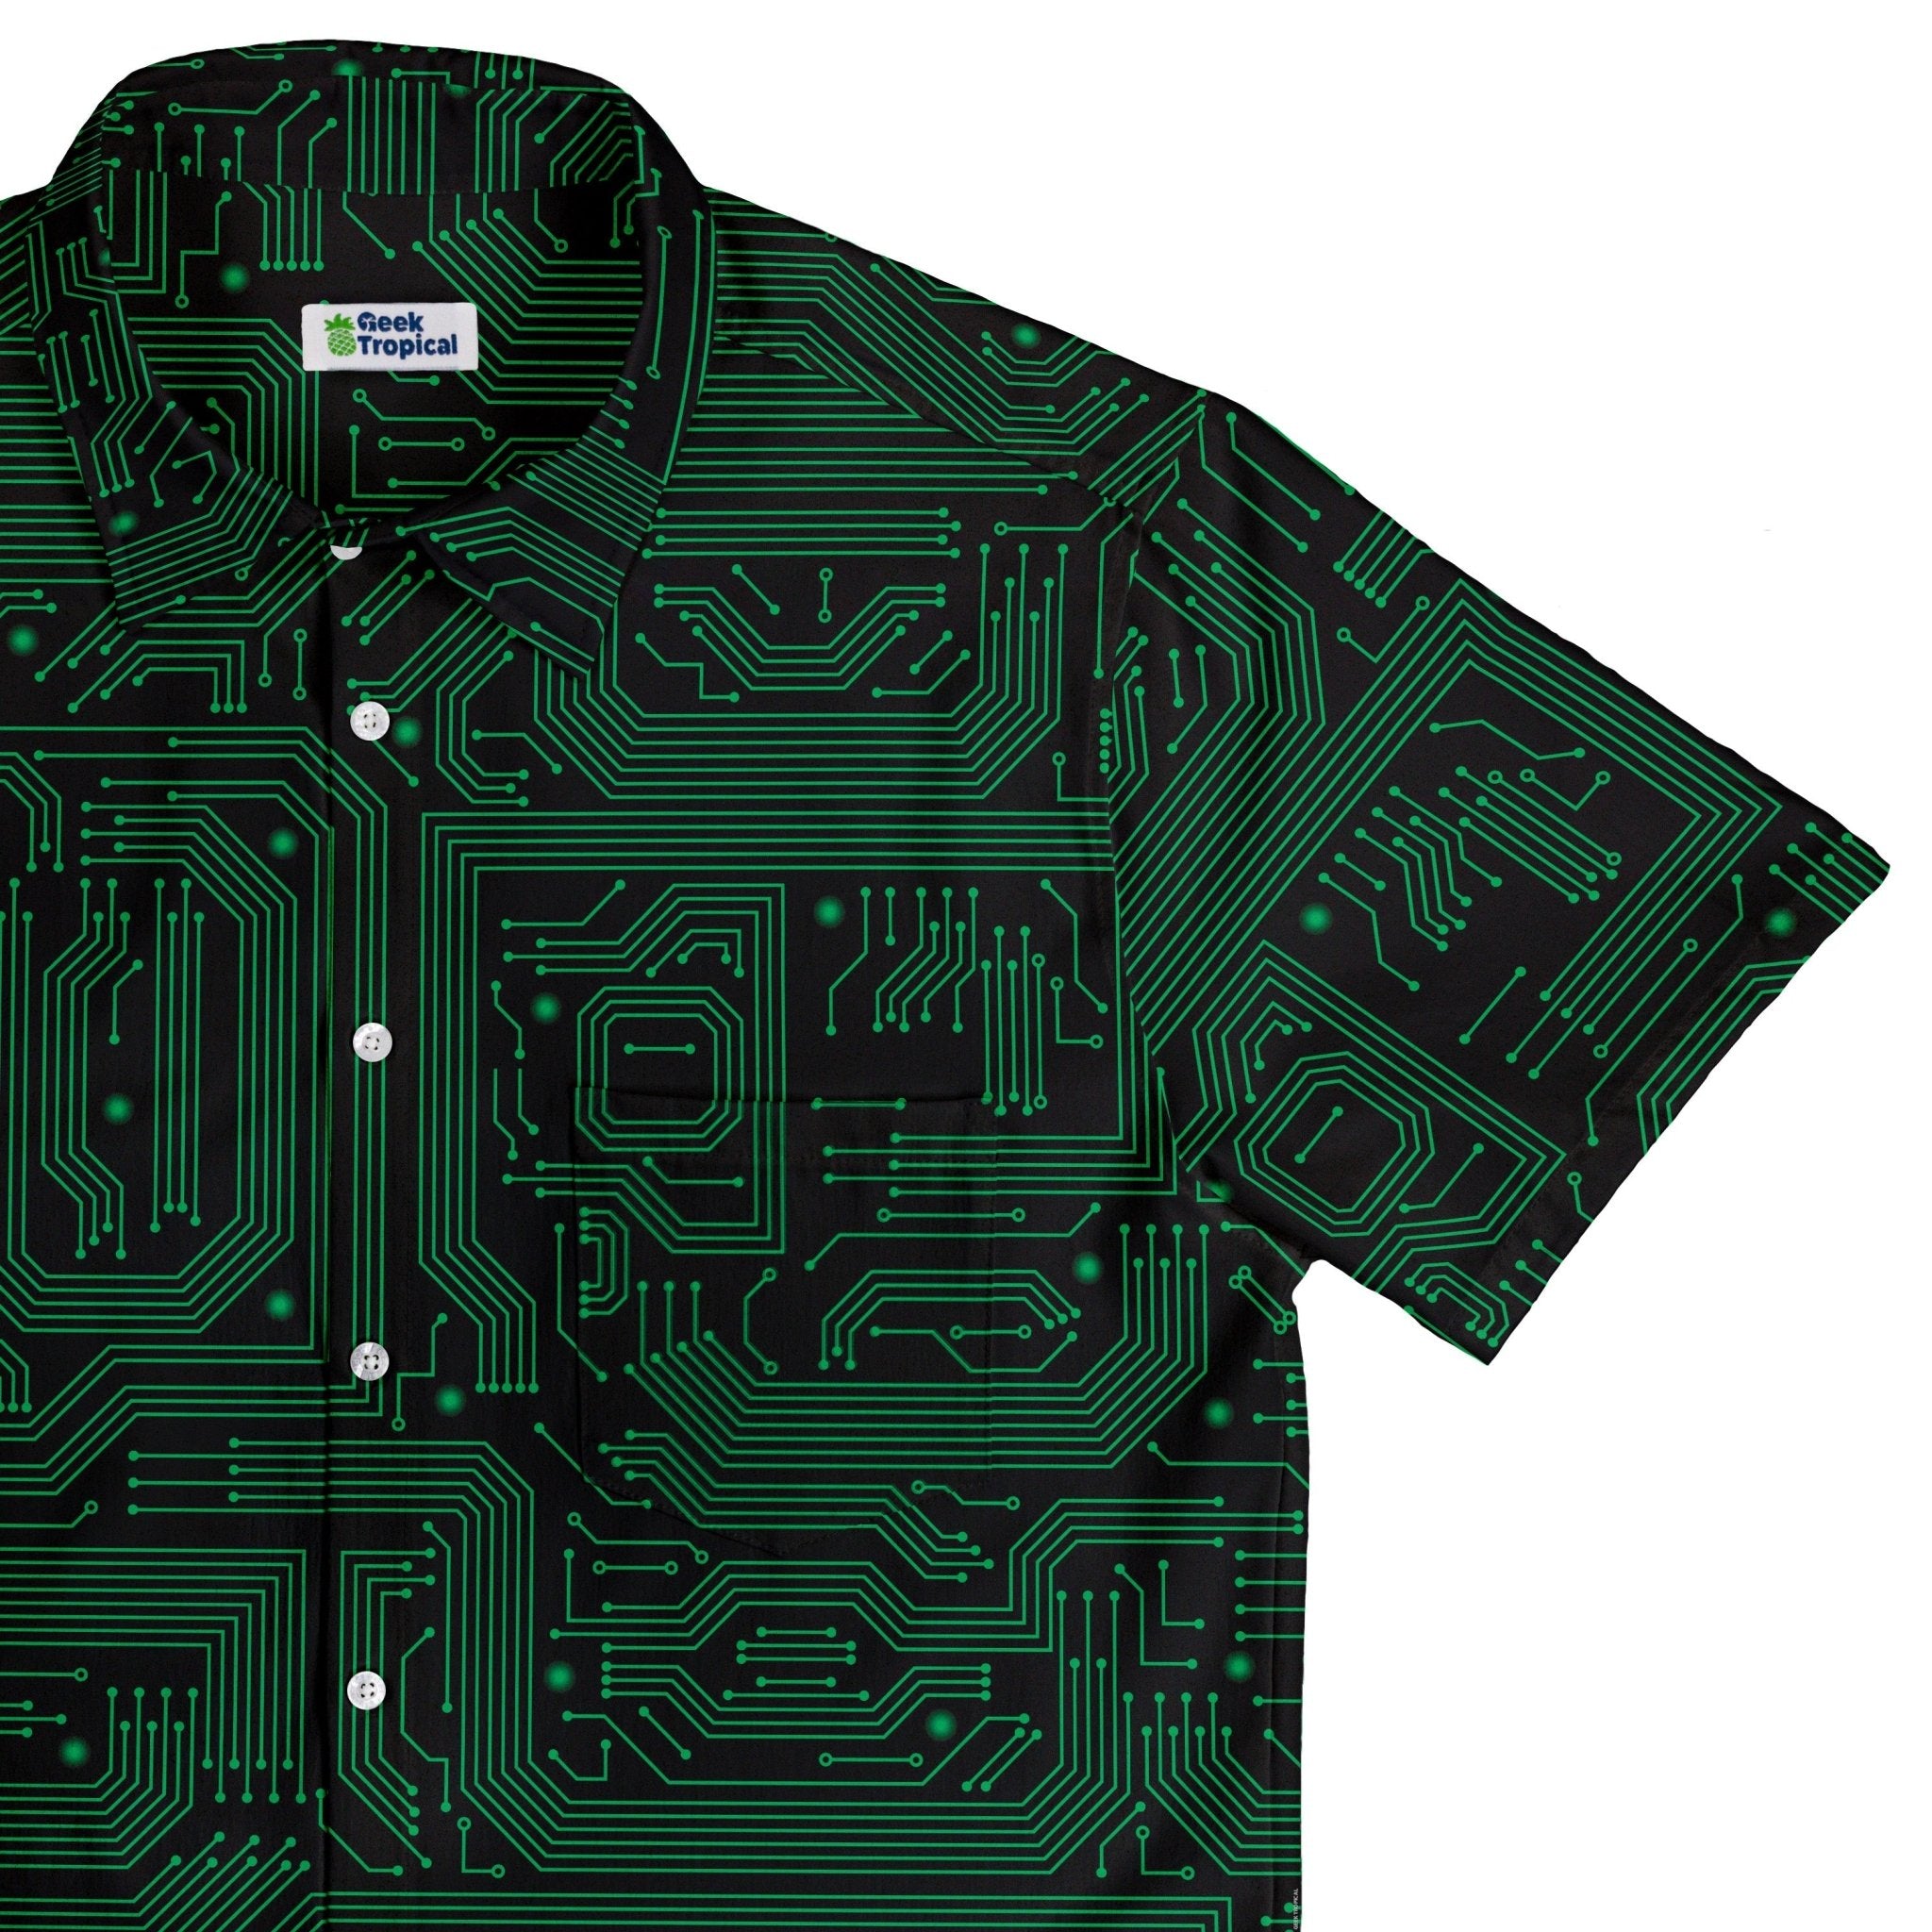 Green Computer Circuits Button Up Shirt - adult sizing - computer print -